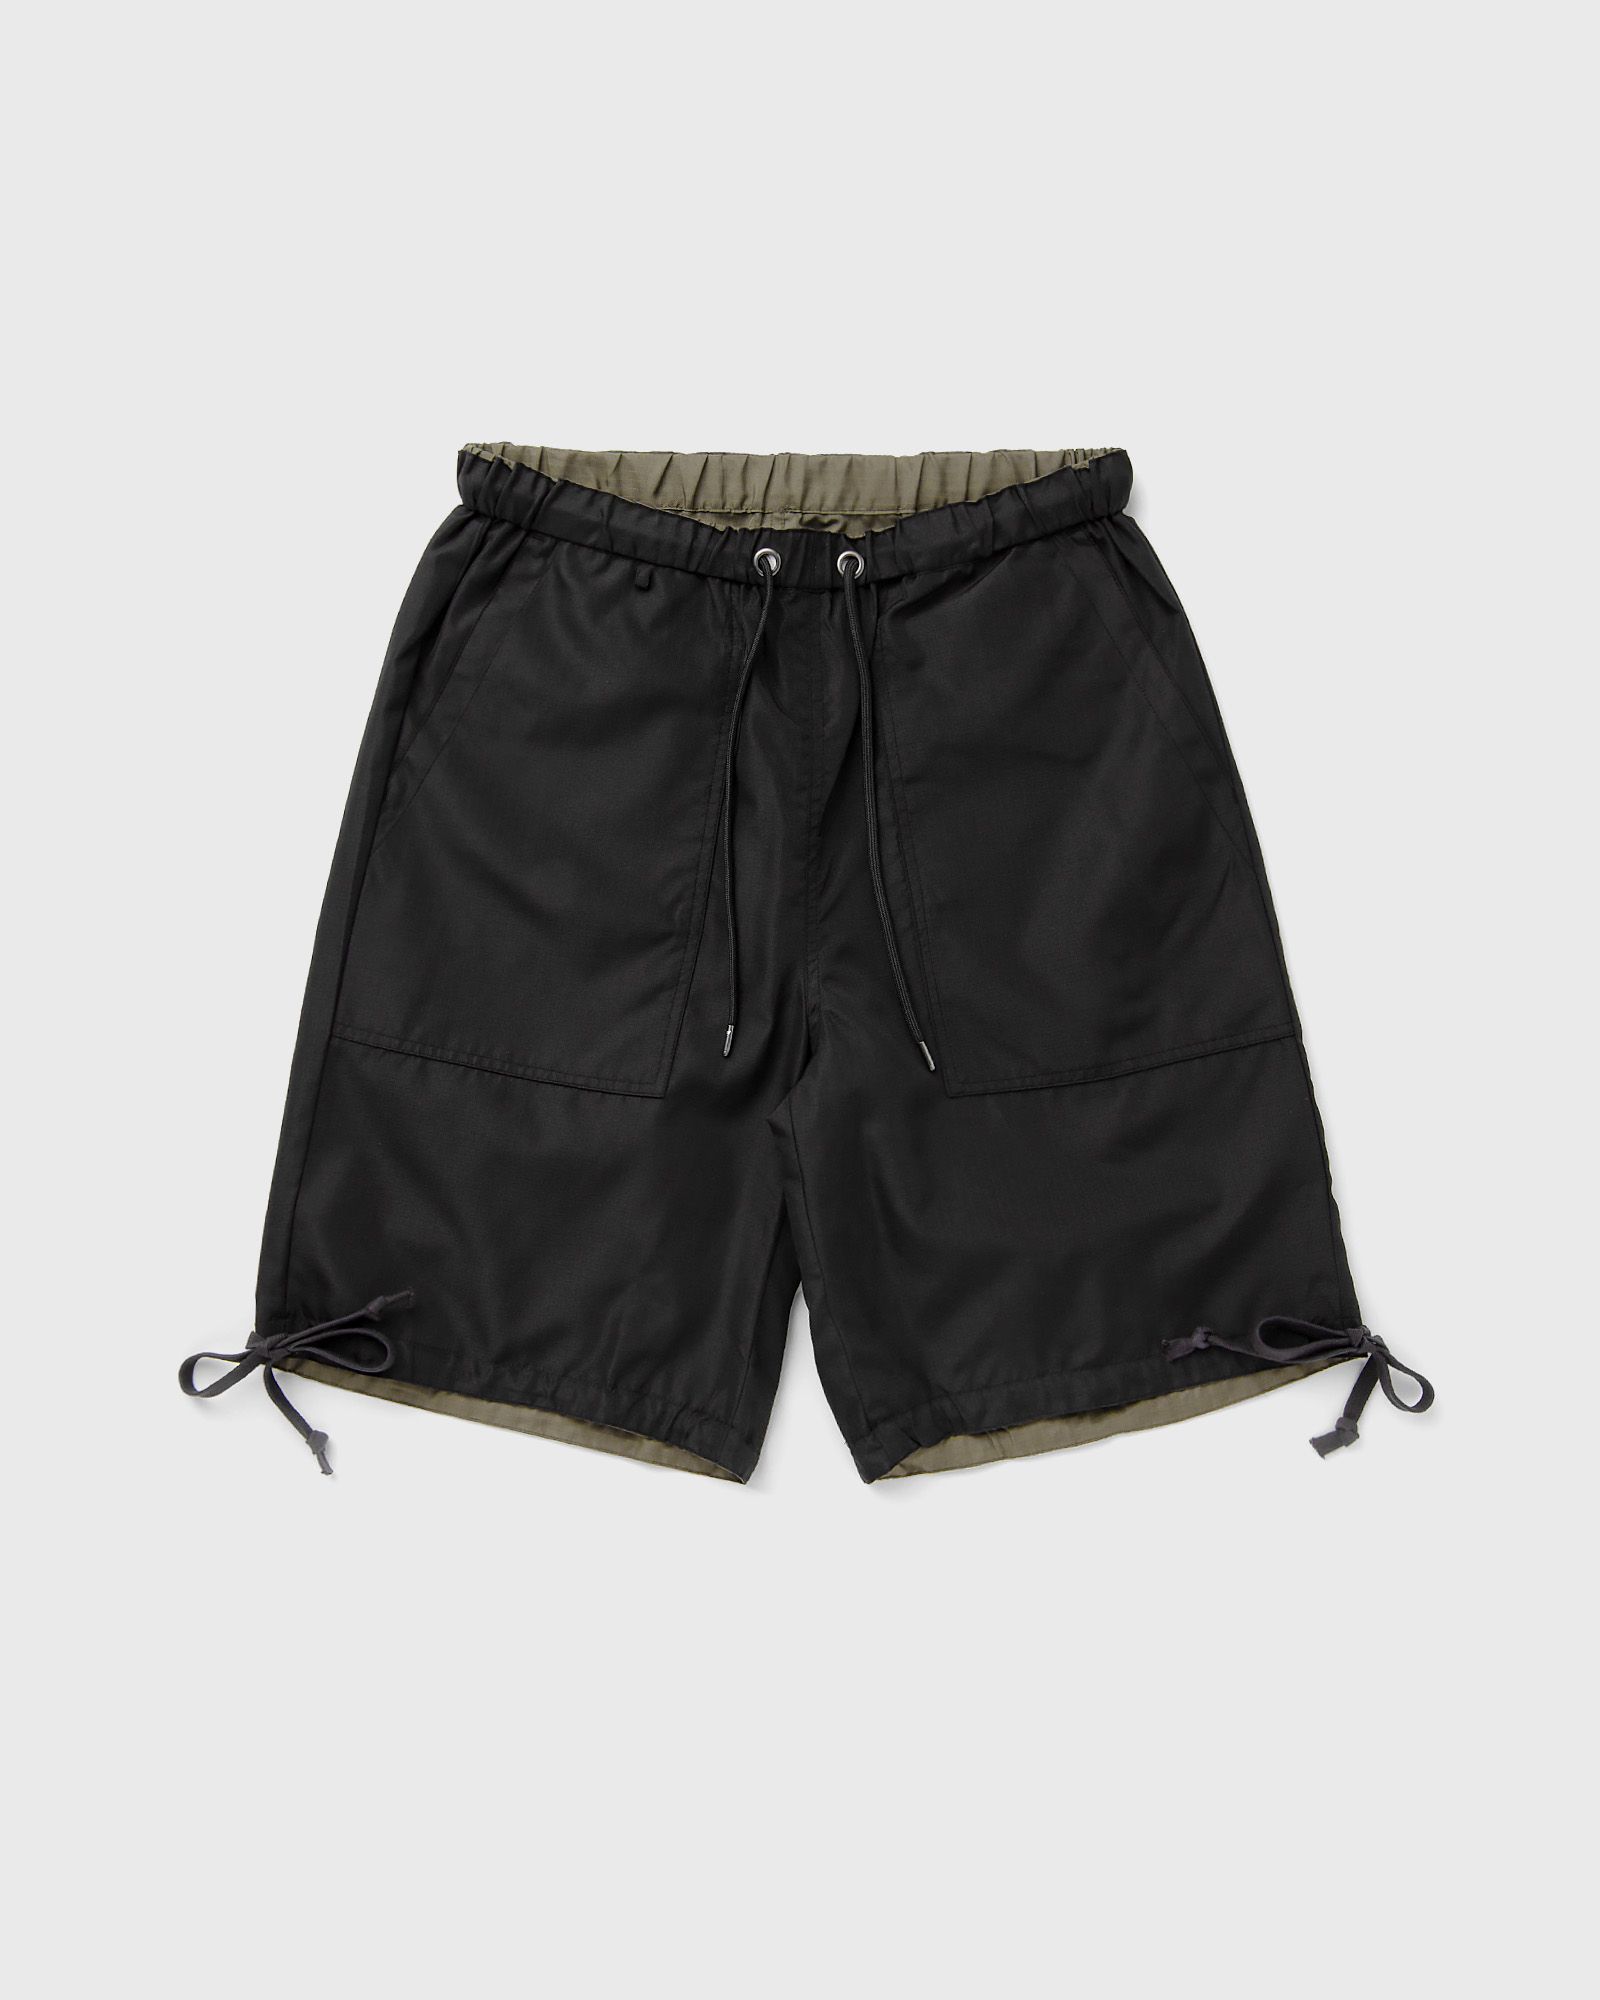 Taion - military rvs short pants men casual shorts black in größe:xl